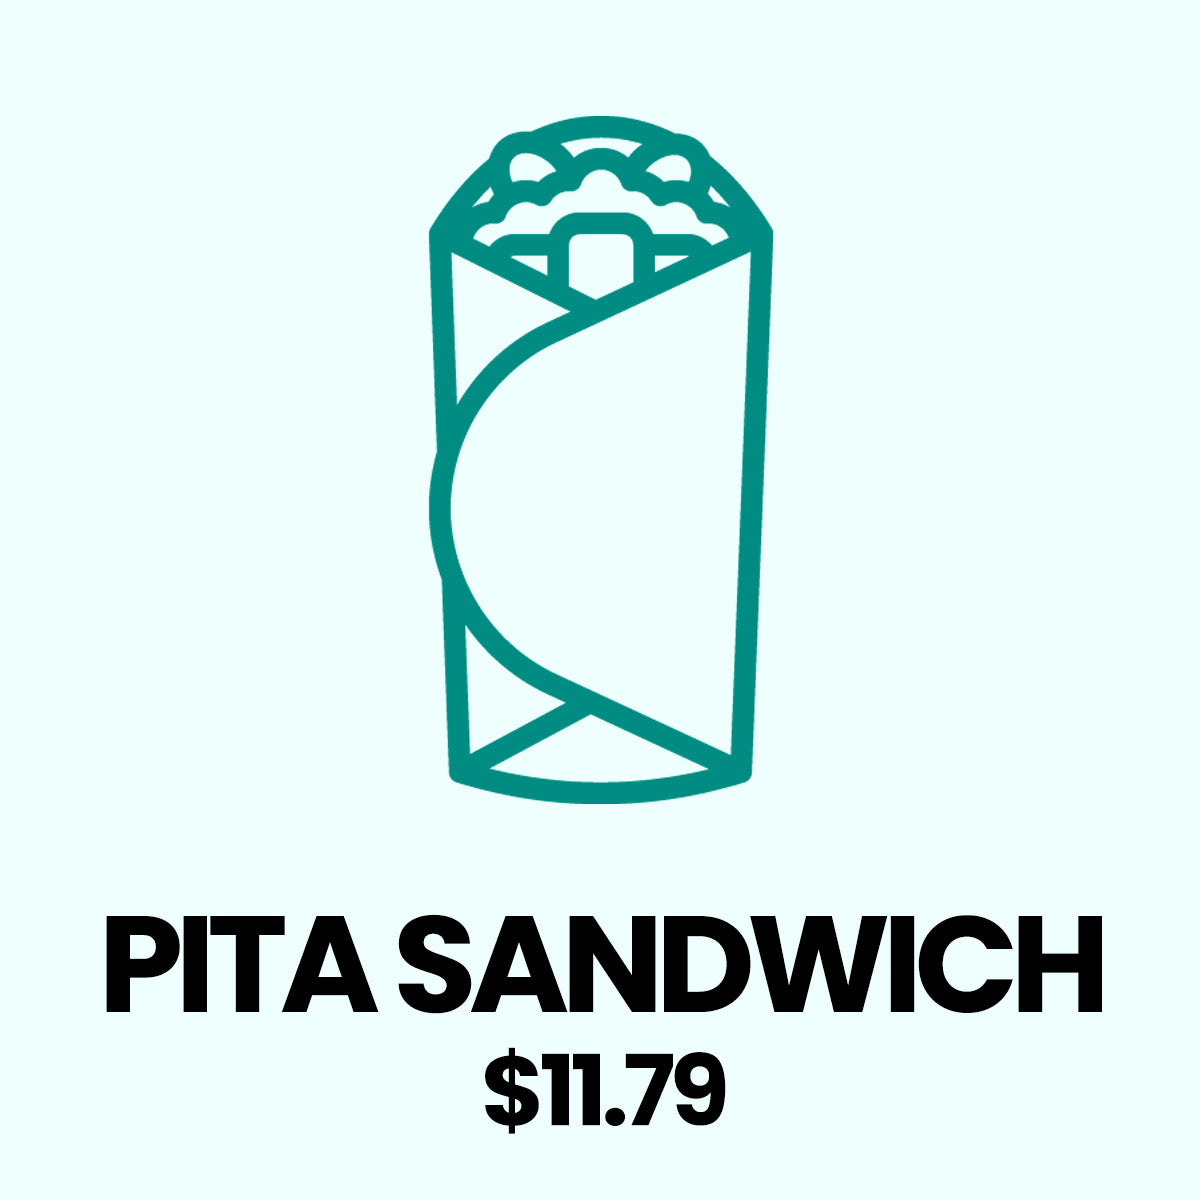 Crea tu propio sándwich de pita - $11,79